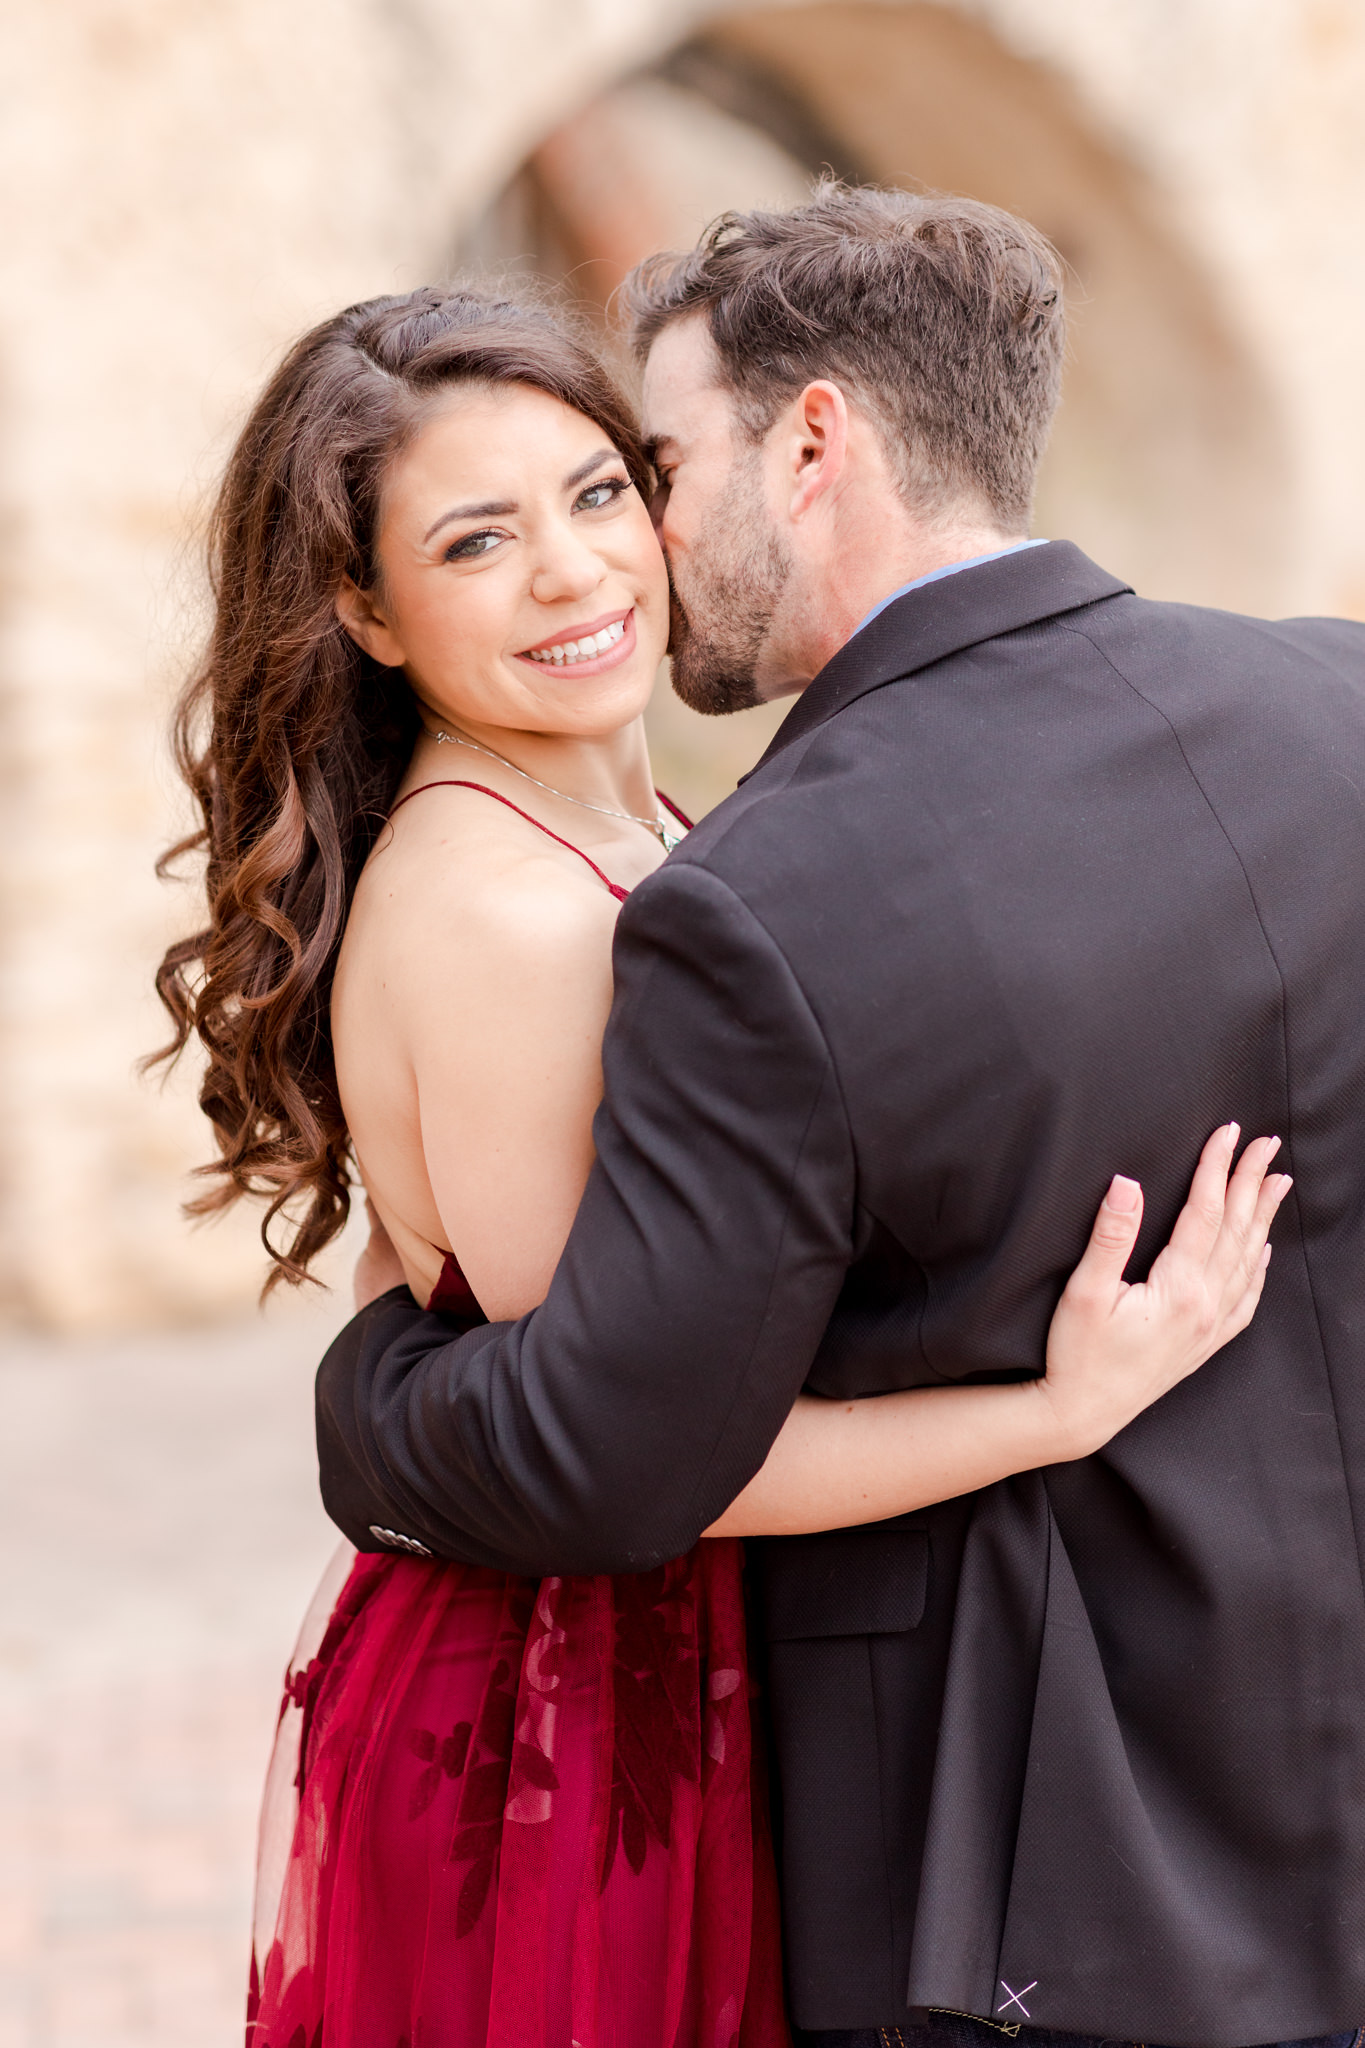 An Engagement Session at Mission San Jose in San Antonio, TX by Dawn Elizabeth Studios, San Antonio Wedding Photographer